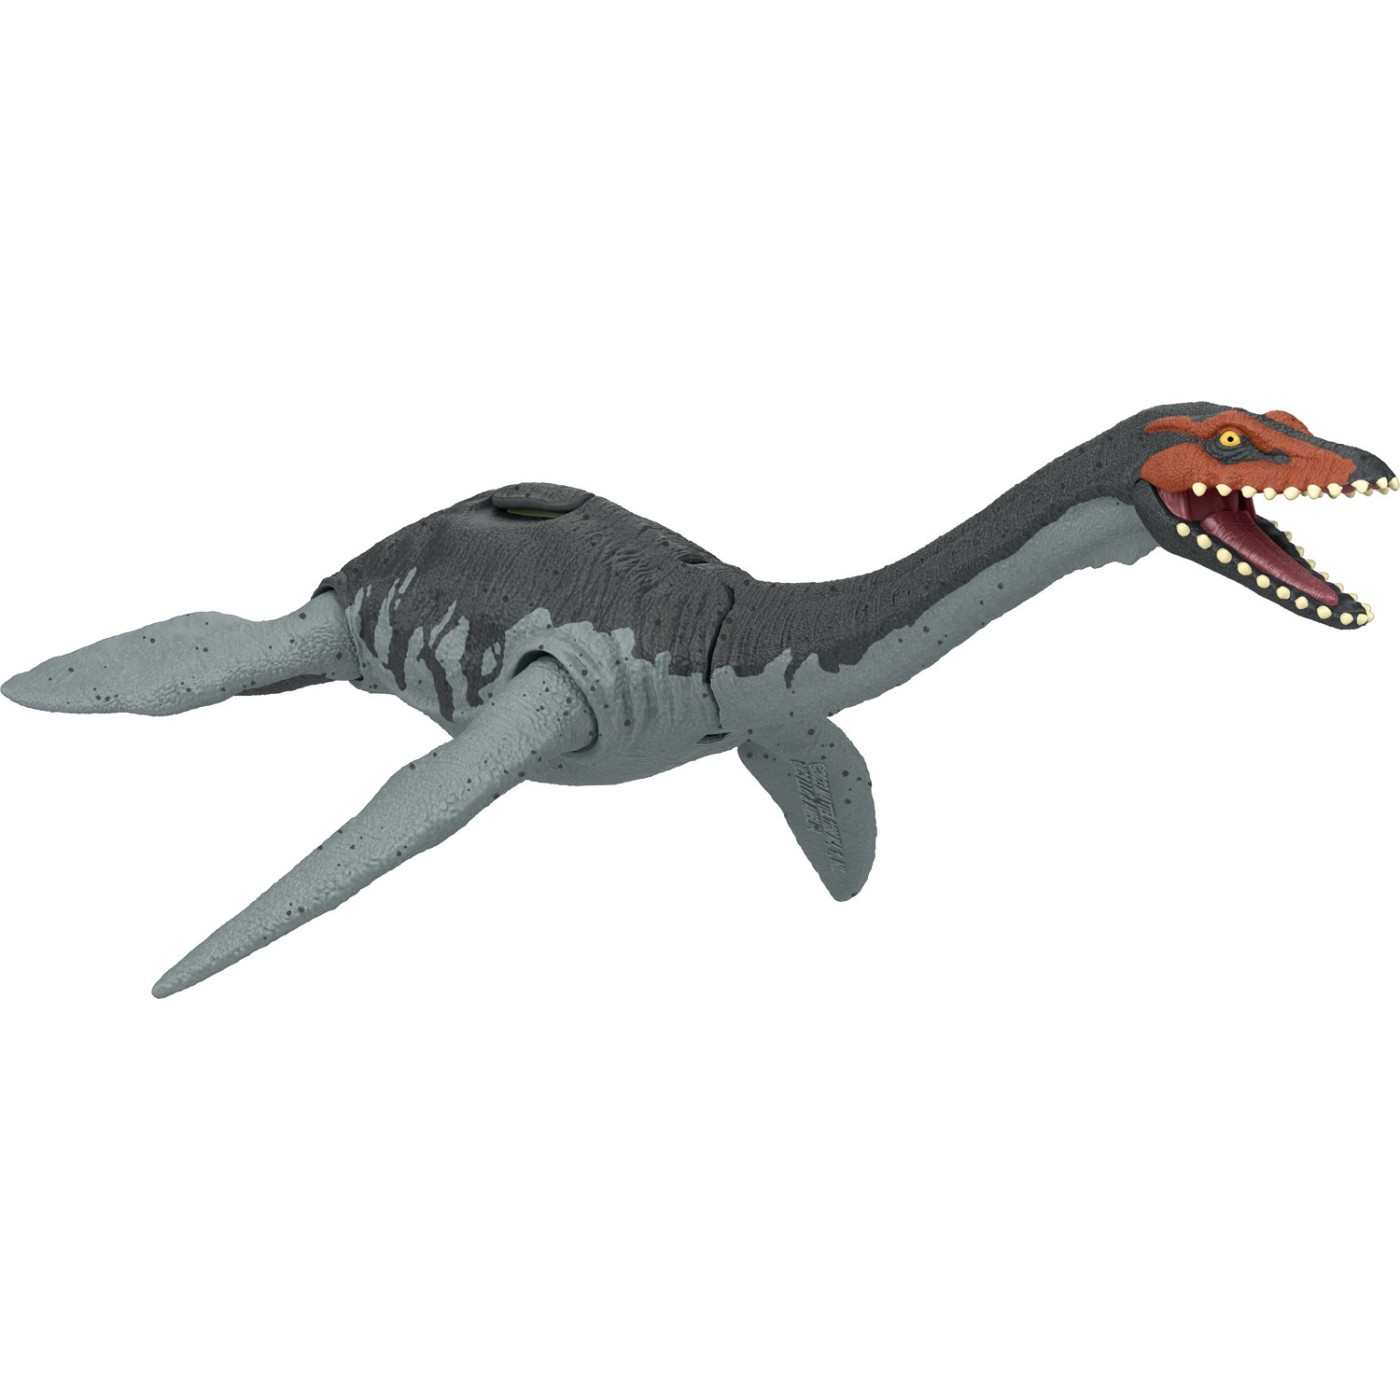 Mattel Βασικές Φιγούρες Δεινοσαύρων Jurassic World Danger Pack Plesiosaurus (HLN49/HTK48)